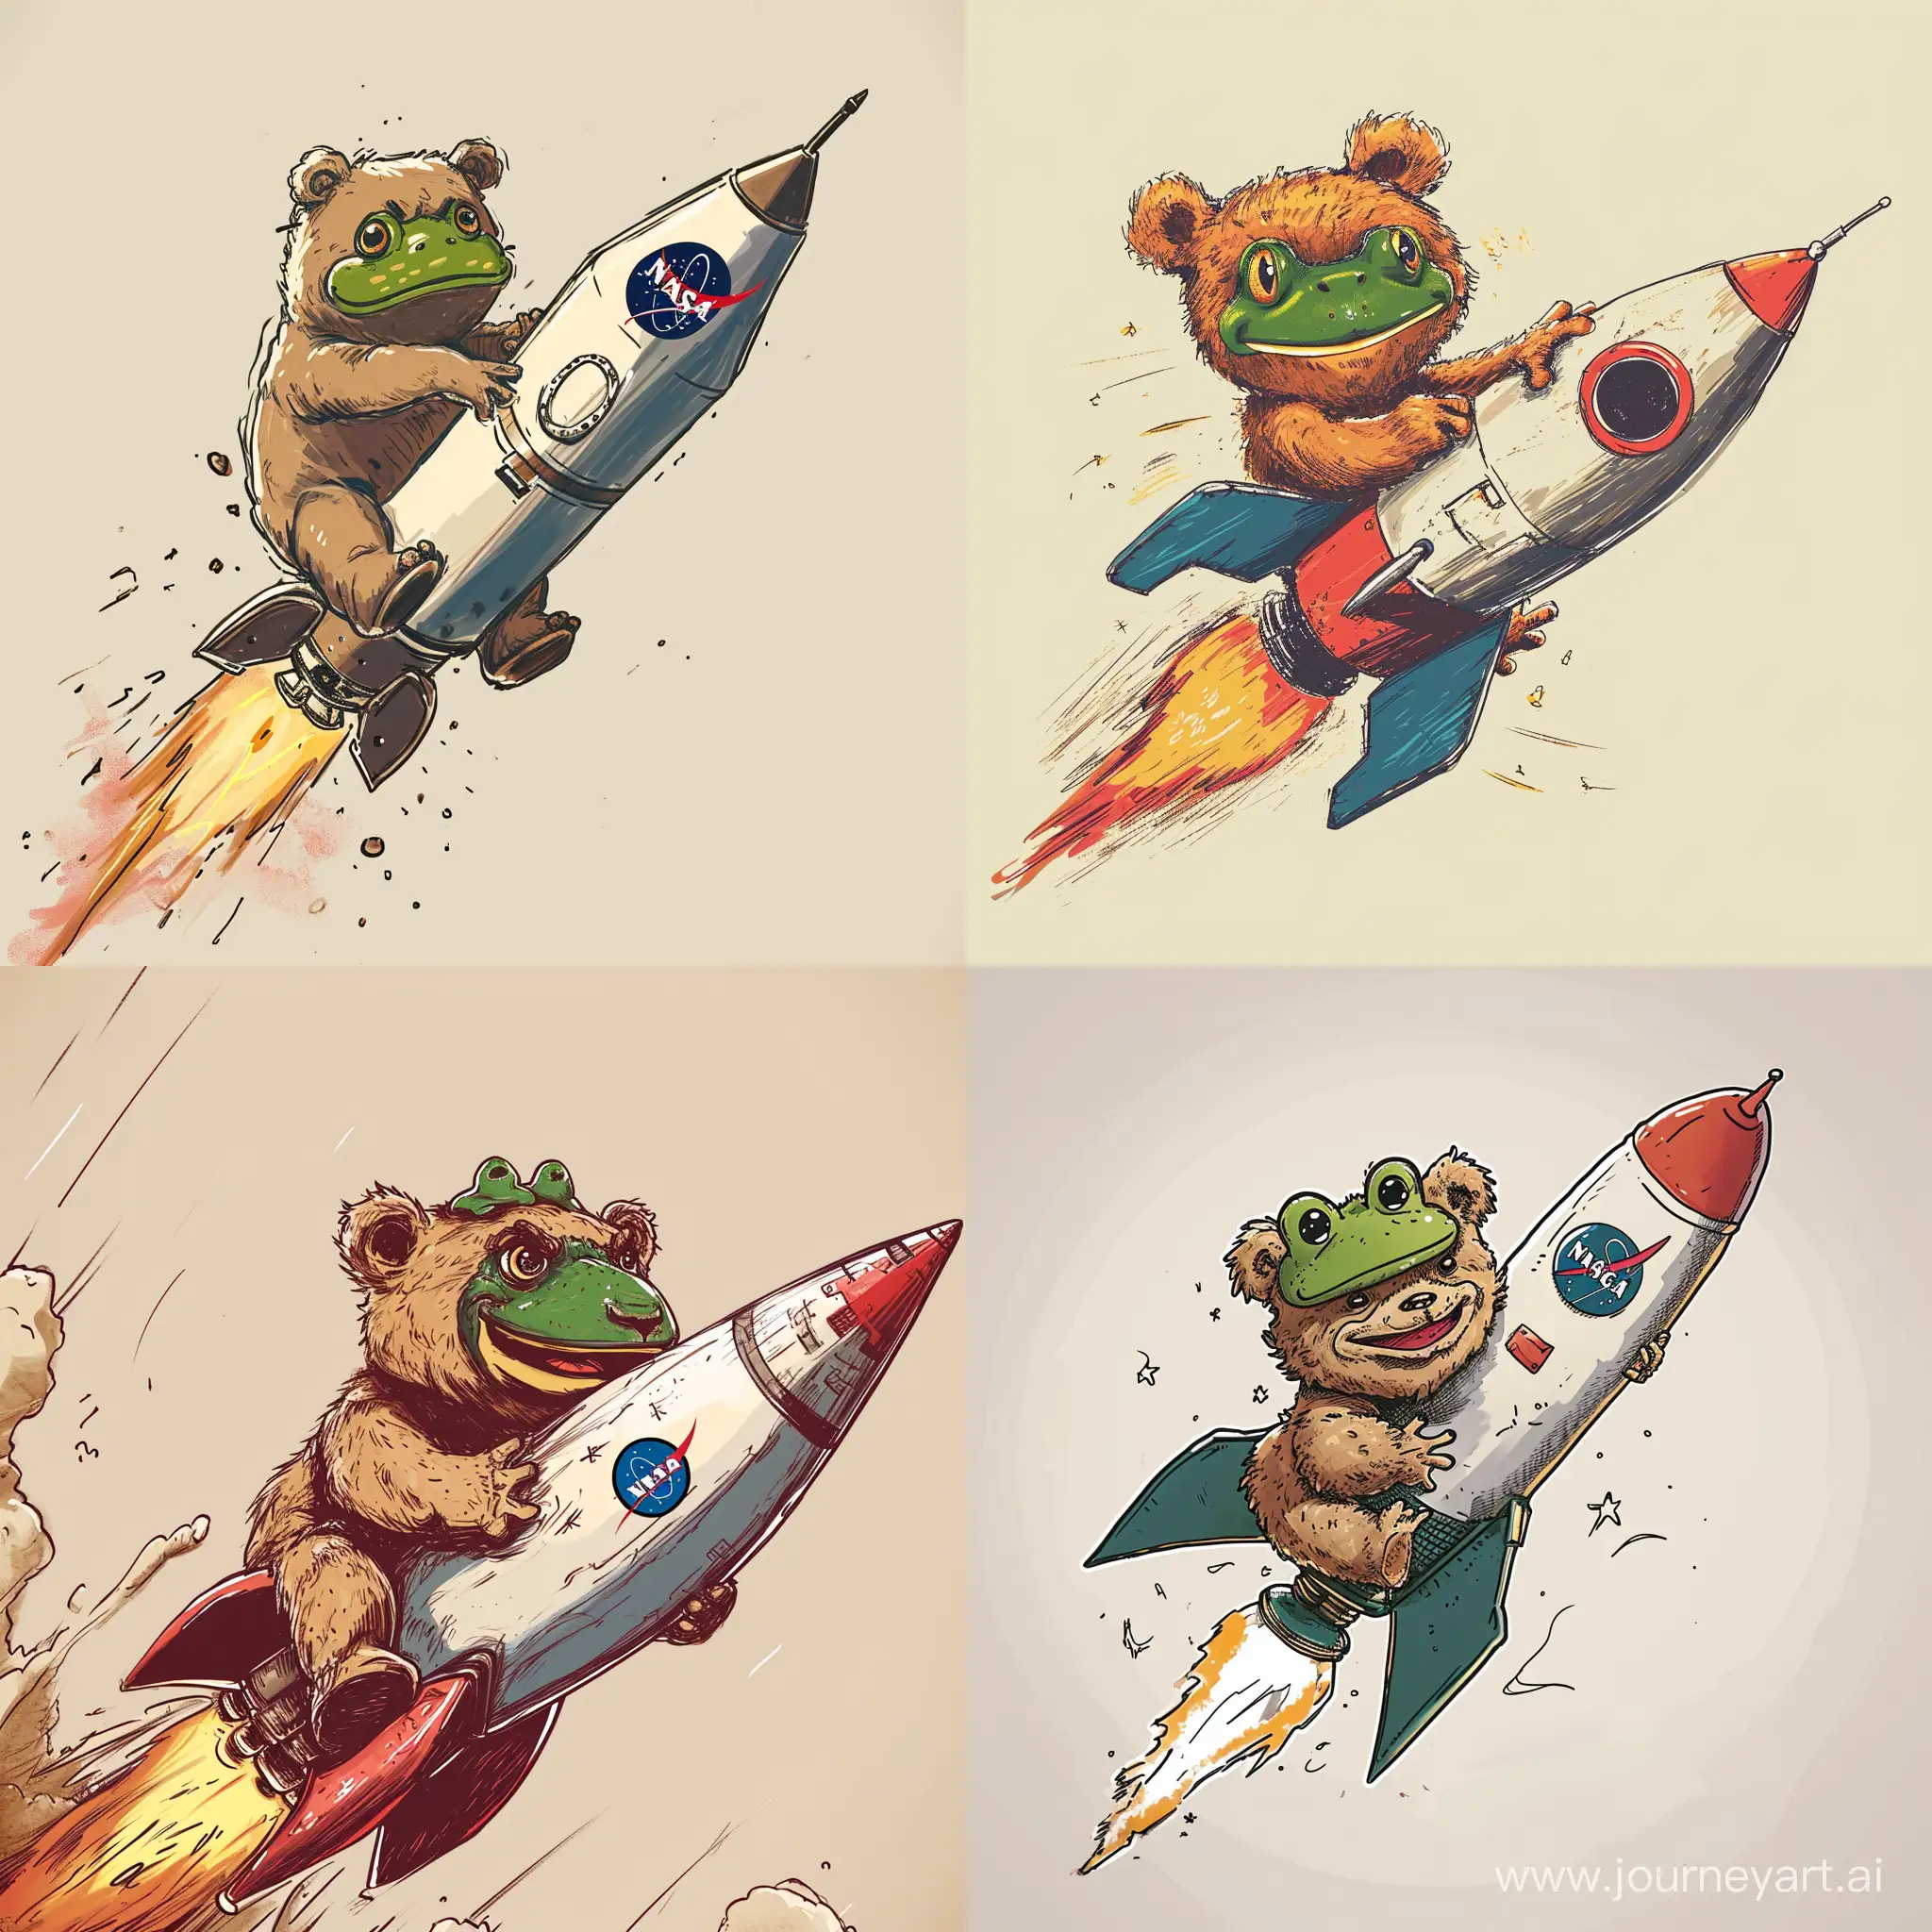 Create bear masculine with Pepe frog  face riding NASA rocket using manga drawing style